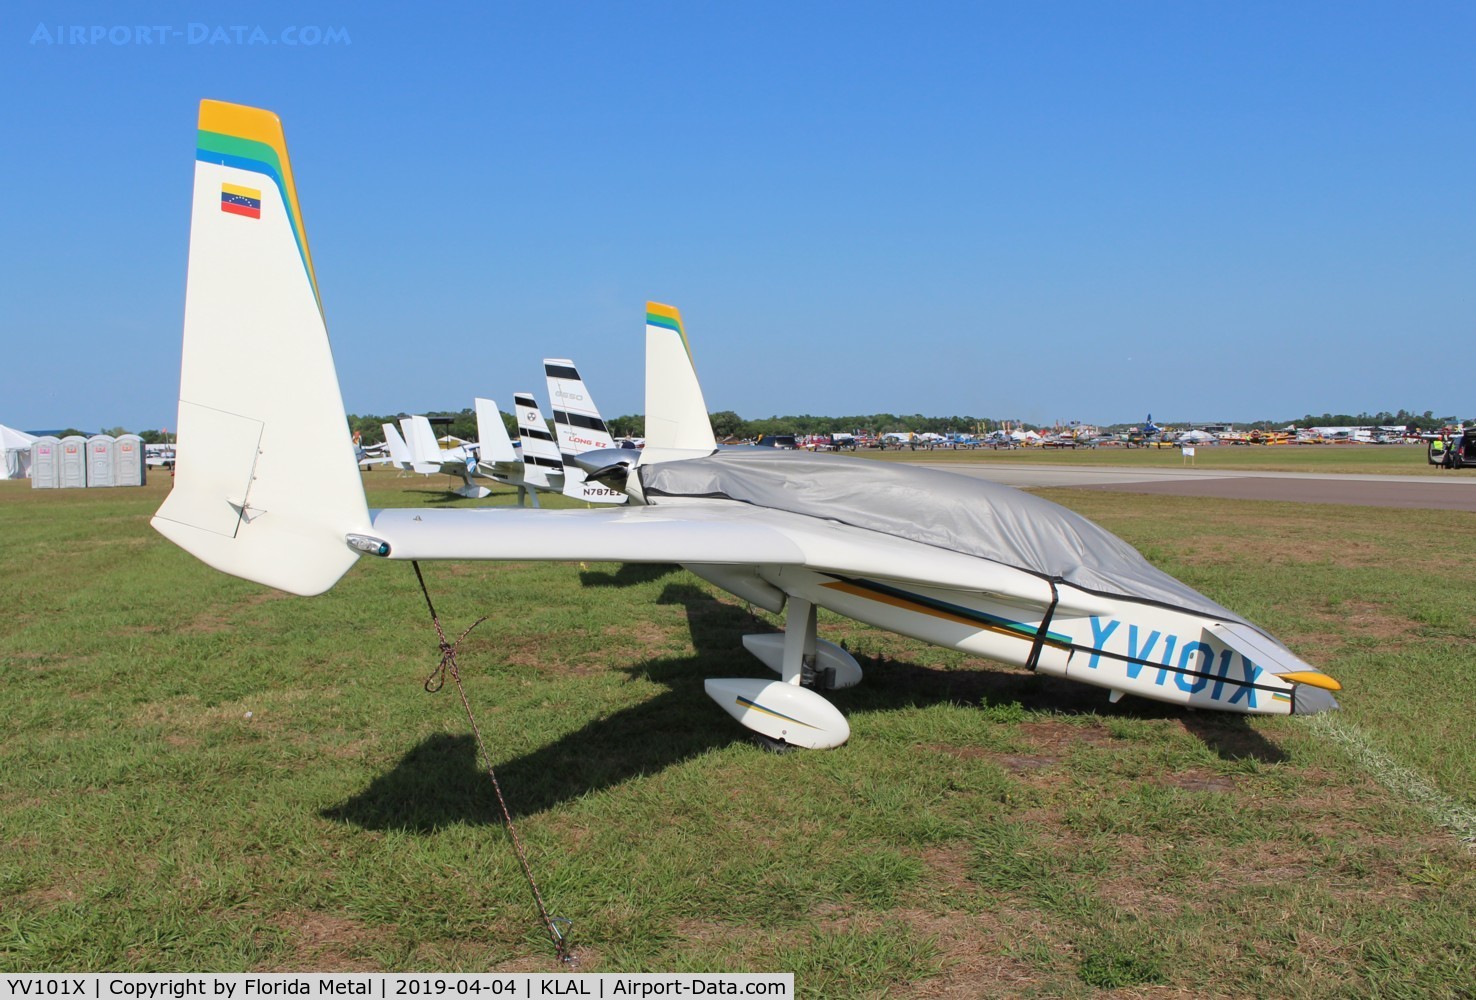 YV101X, Rutan Long-EZ 61 C/N 1521, Interesting story about this aircraft - https://www.kitplanes.com/caracas-to-lakeland-in-a-long-ez/